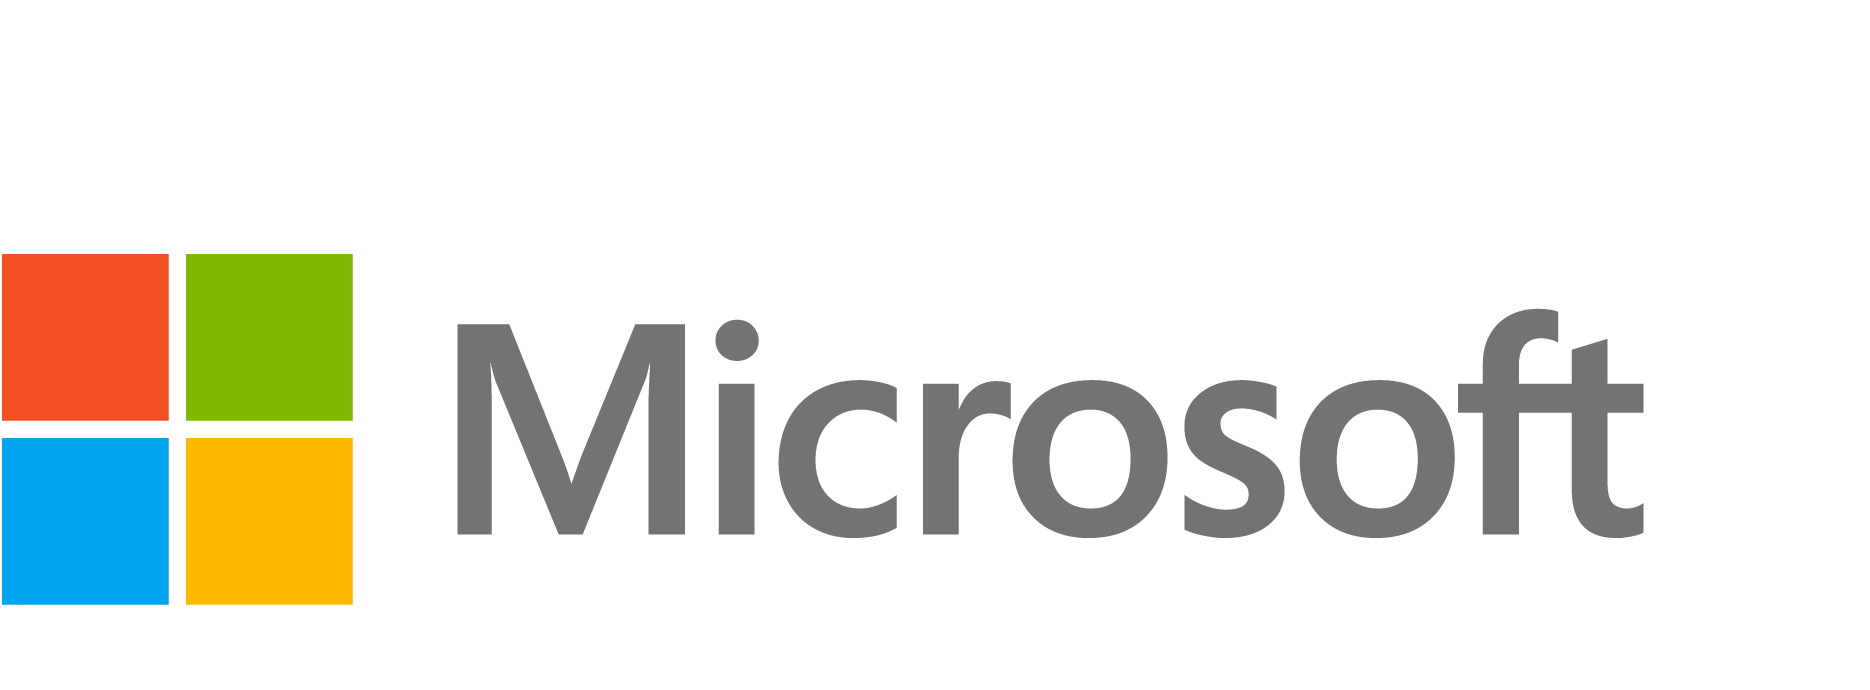 microsoft-logo-png-transparent-20